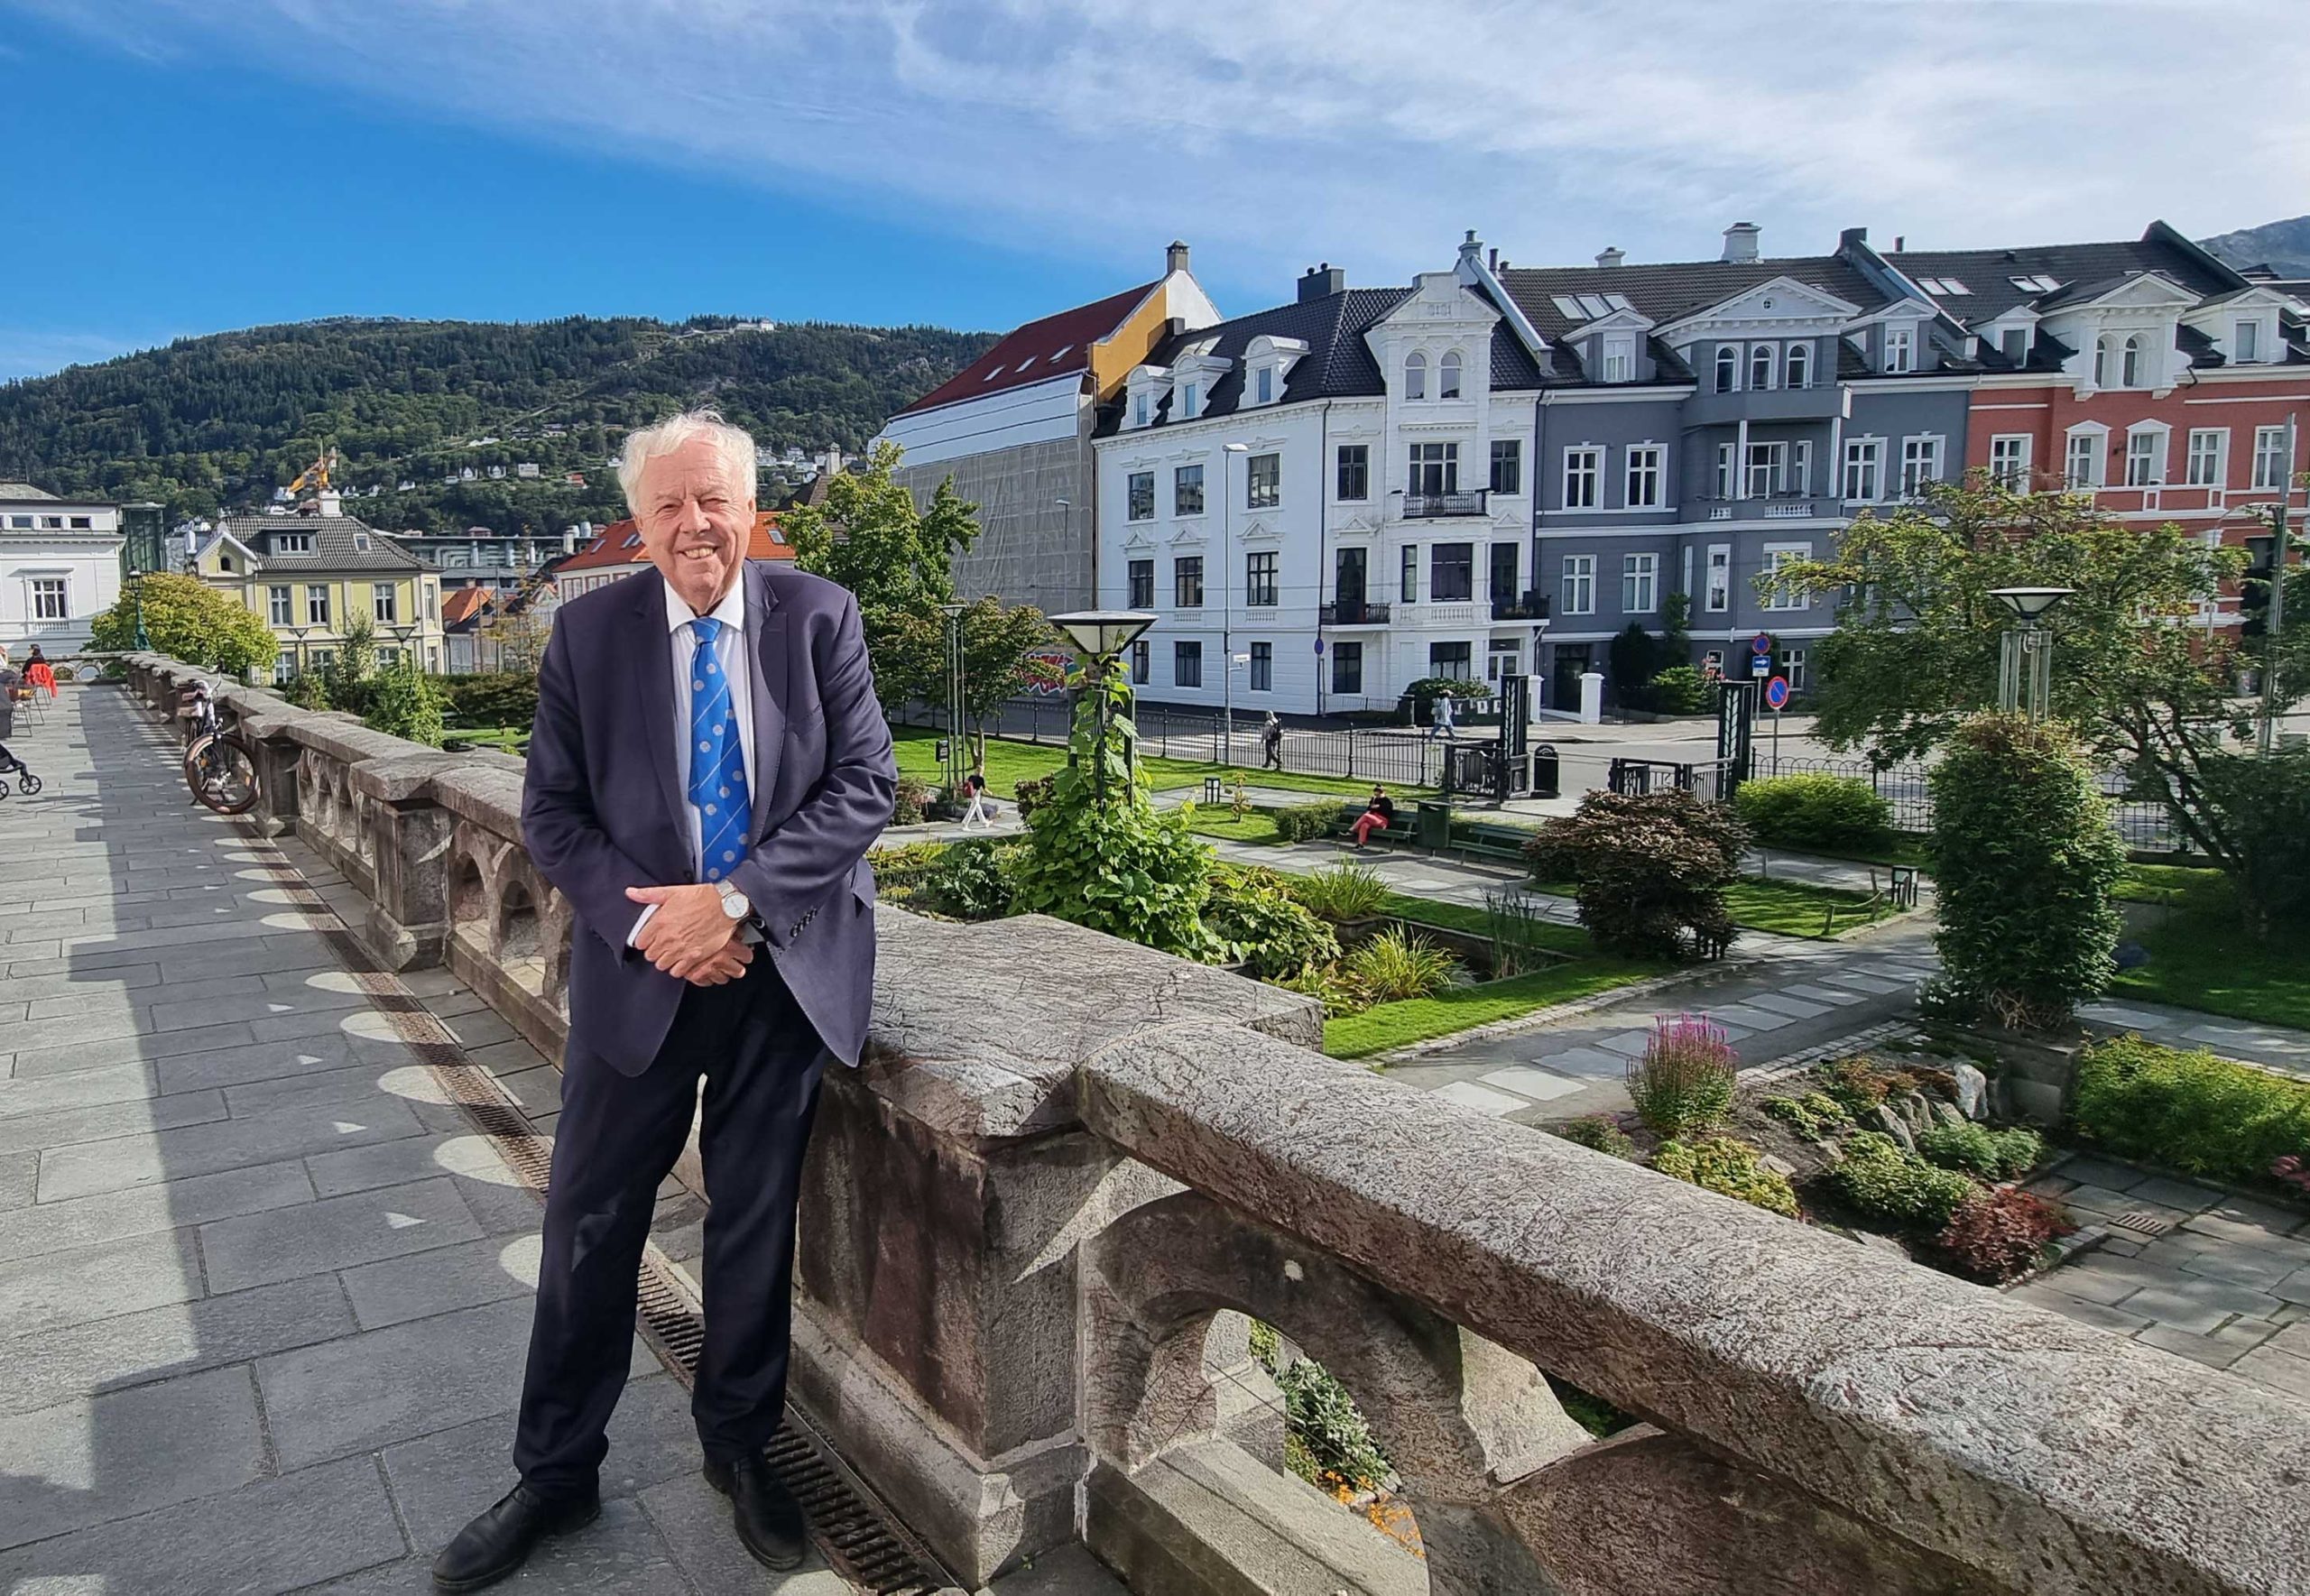 Former president of Academia Europaea, Sierd Cloetingh, on his visit to the University of Bergen in September 2022.